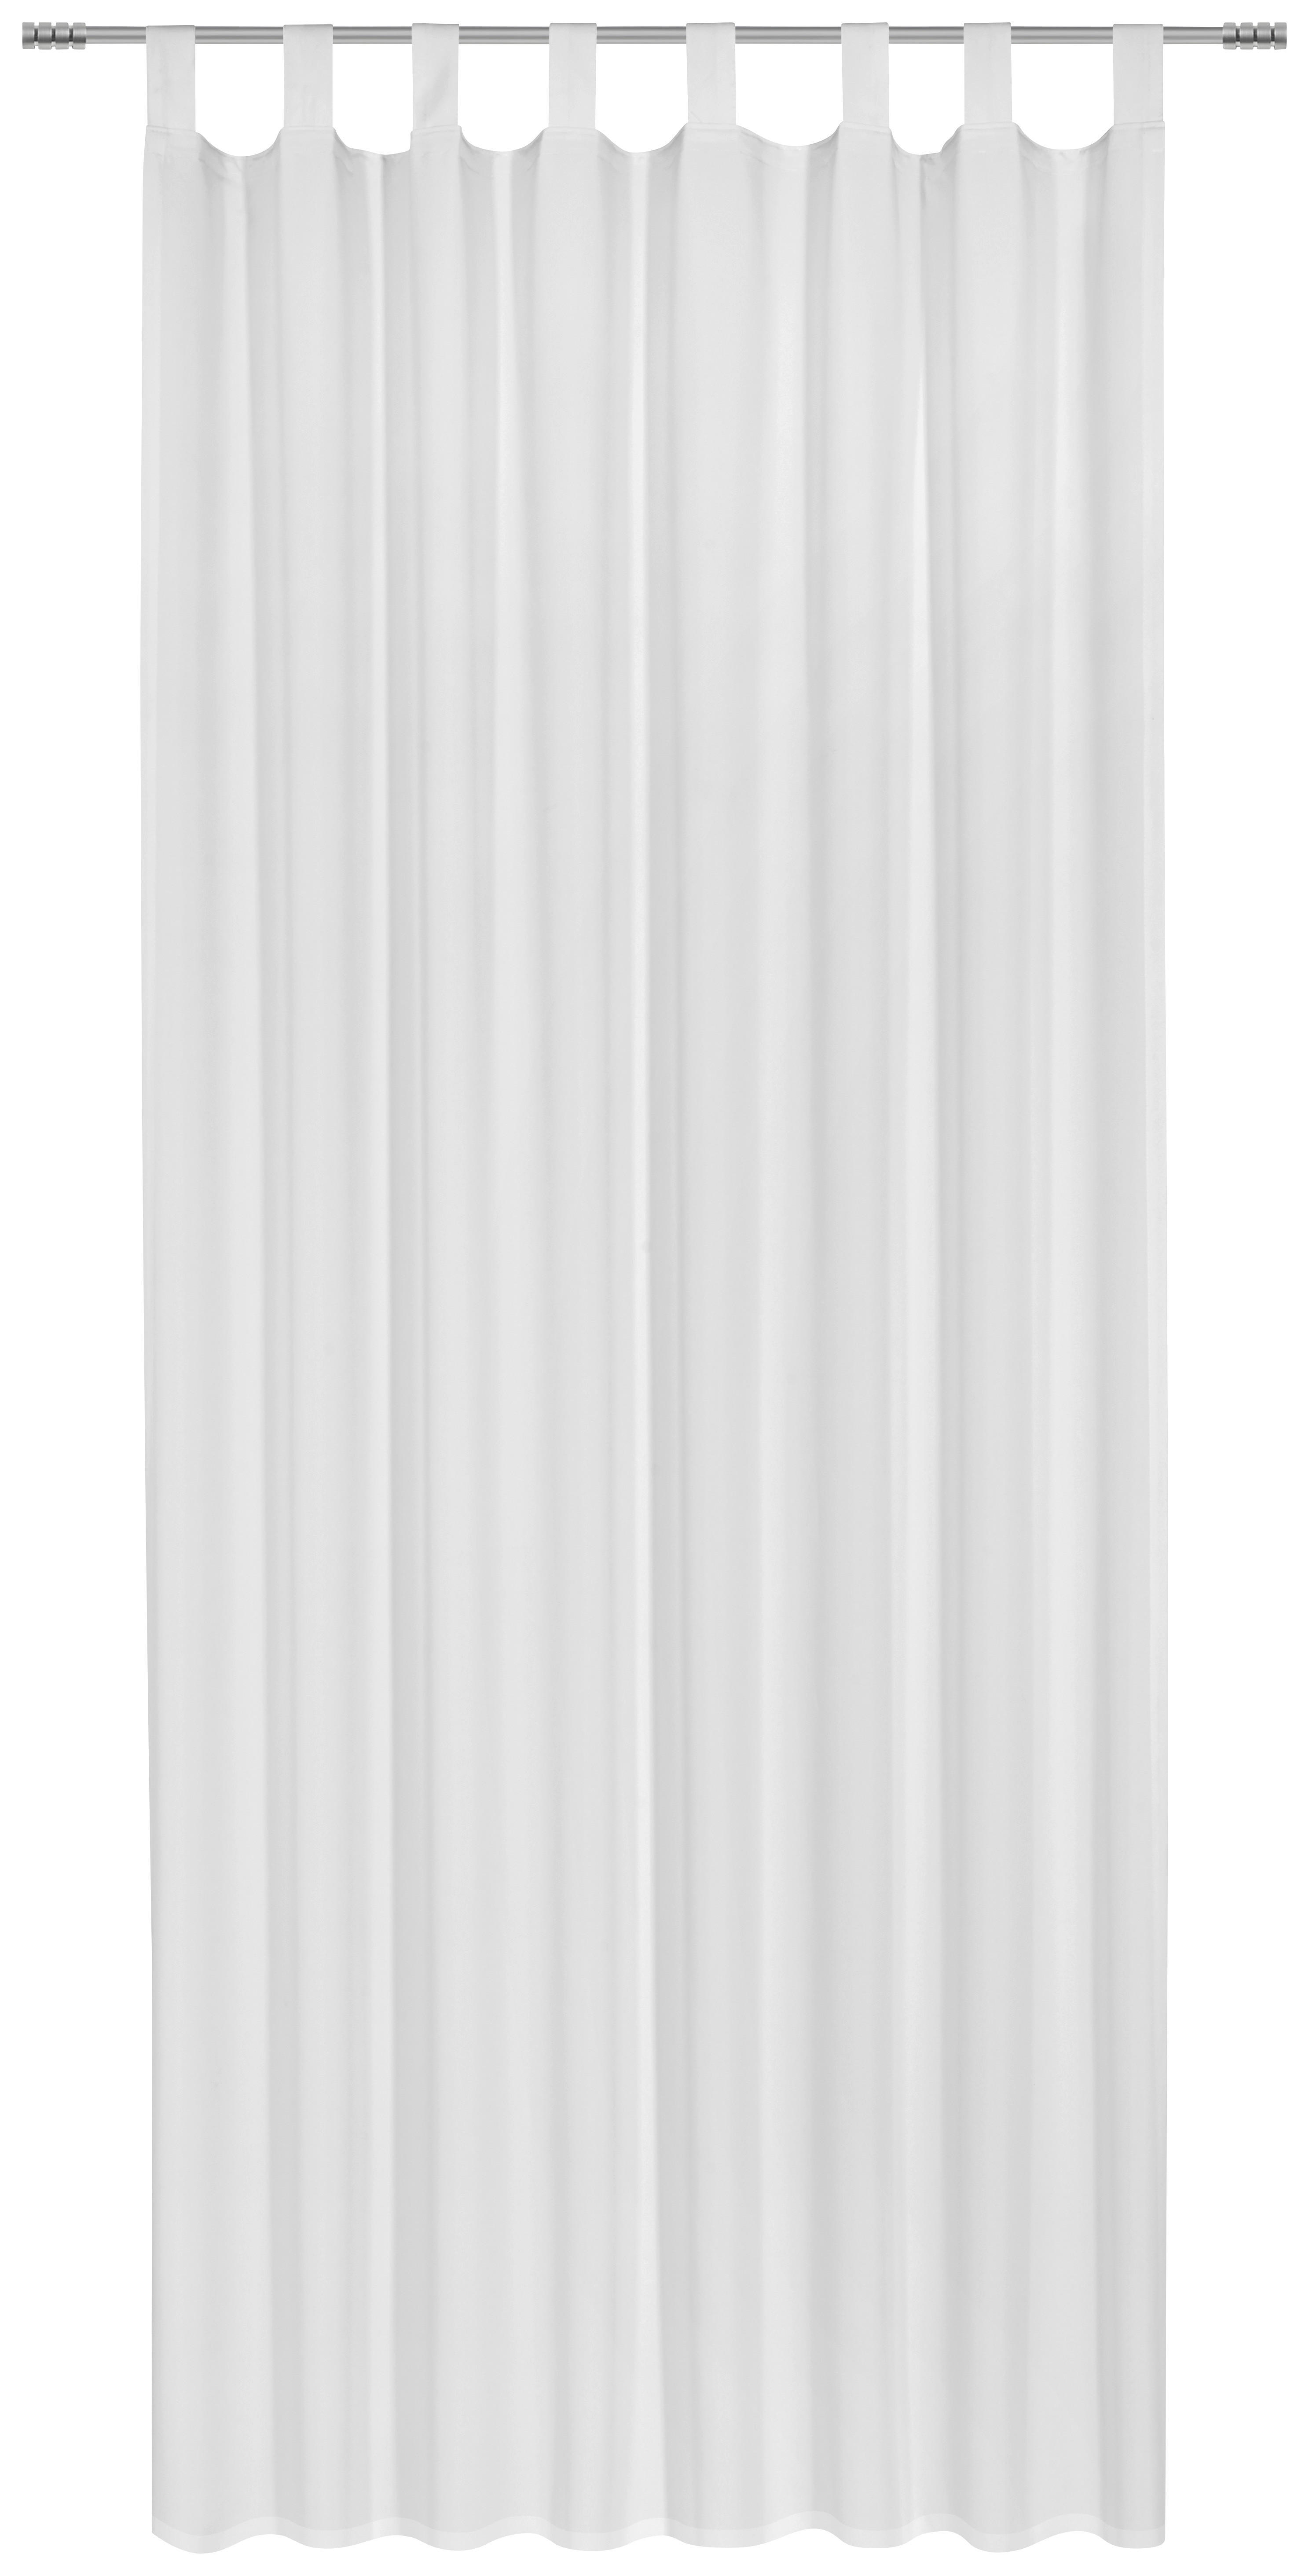 OUTDOORVORHANG blickdicht  - Weiß, Basics, Textil (140/300cm) - Esposa